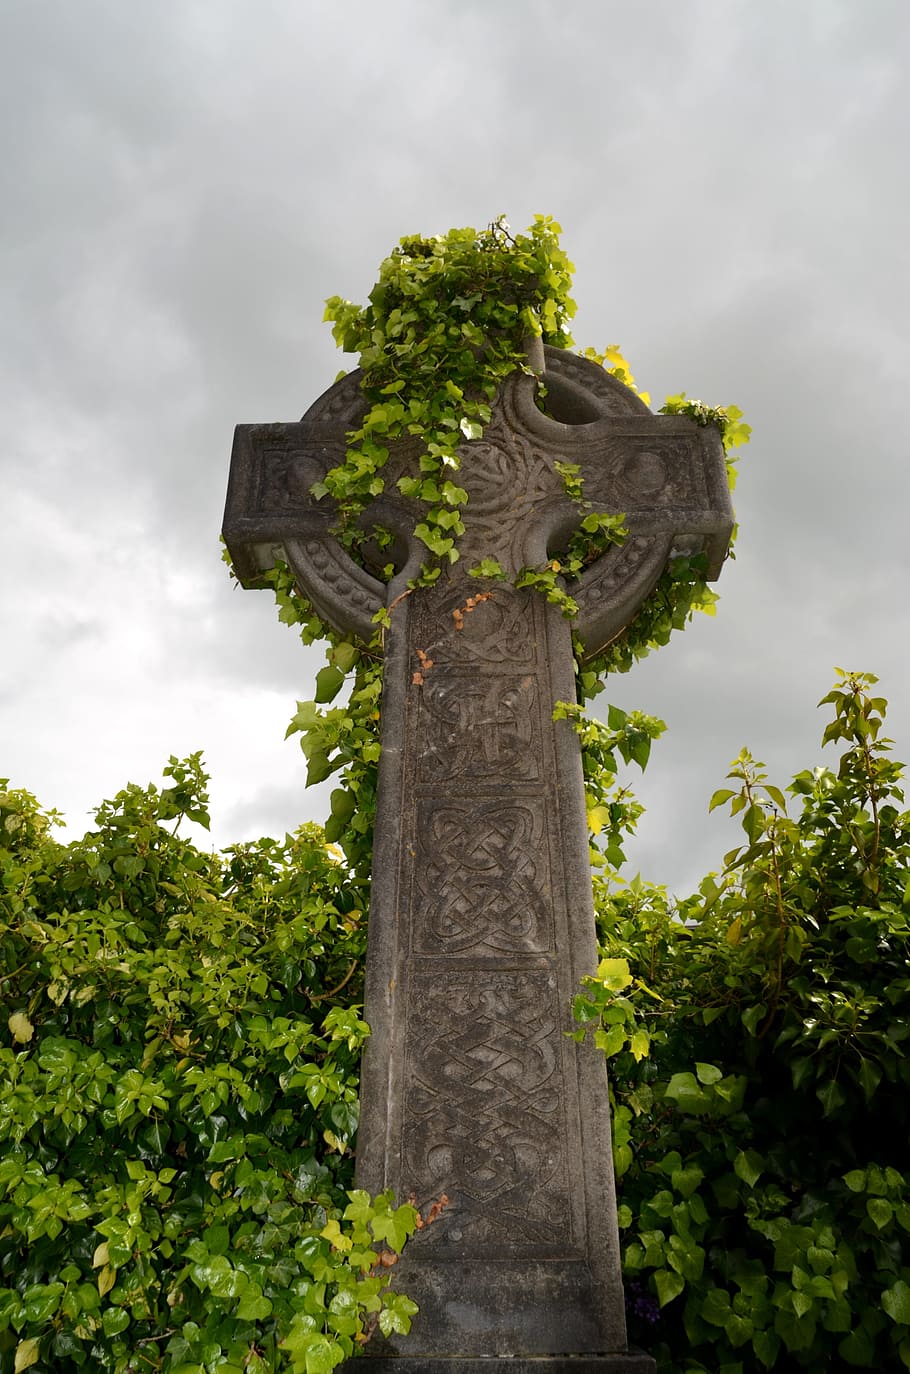 High Cross, Ireland, Celts, Grave, cross, old, stone, tree, cloud - sky, tree trunk